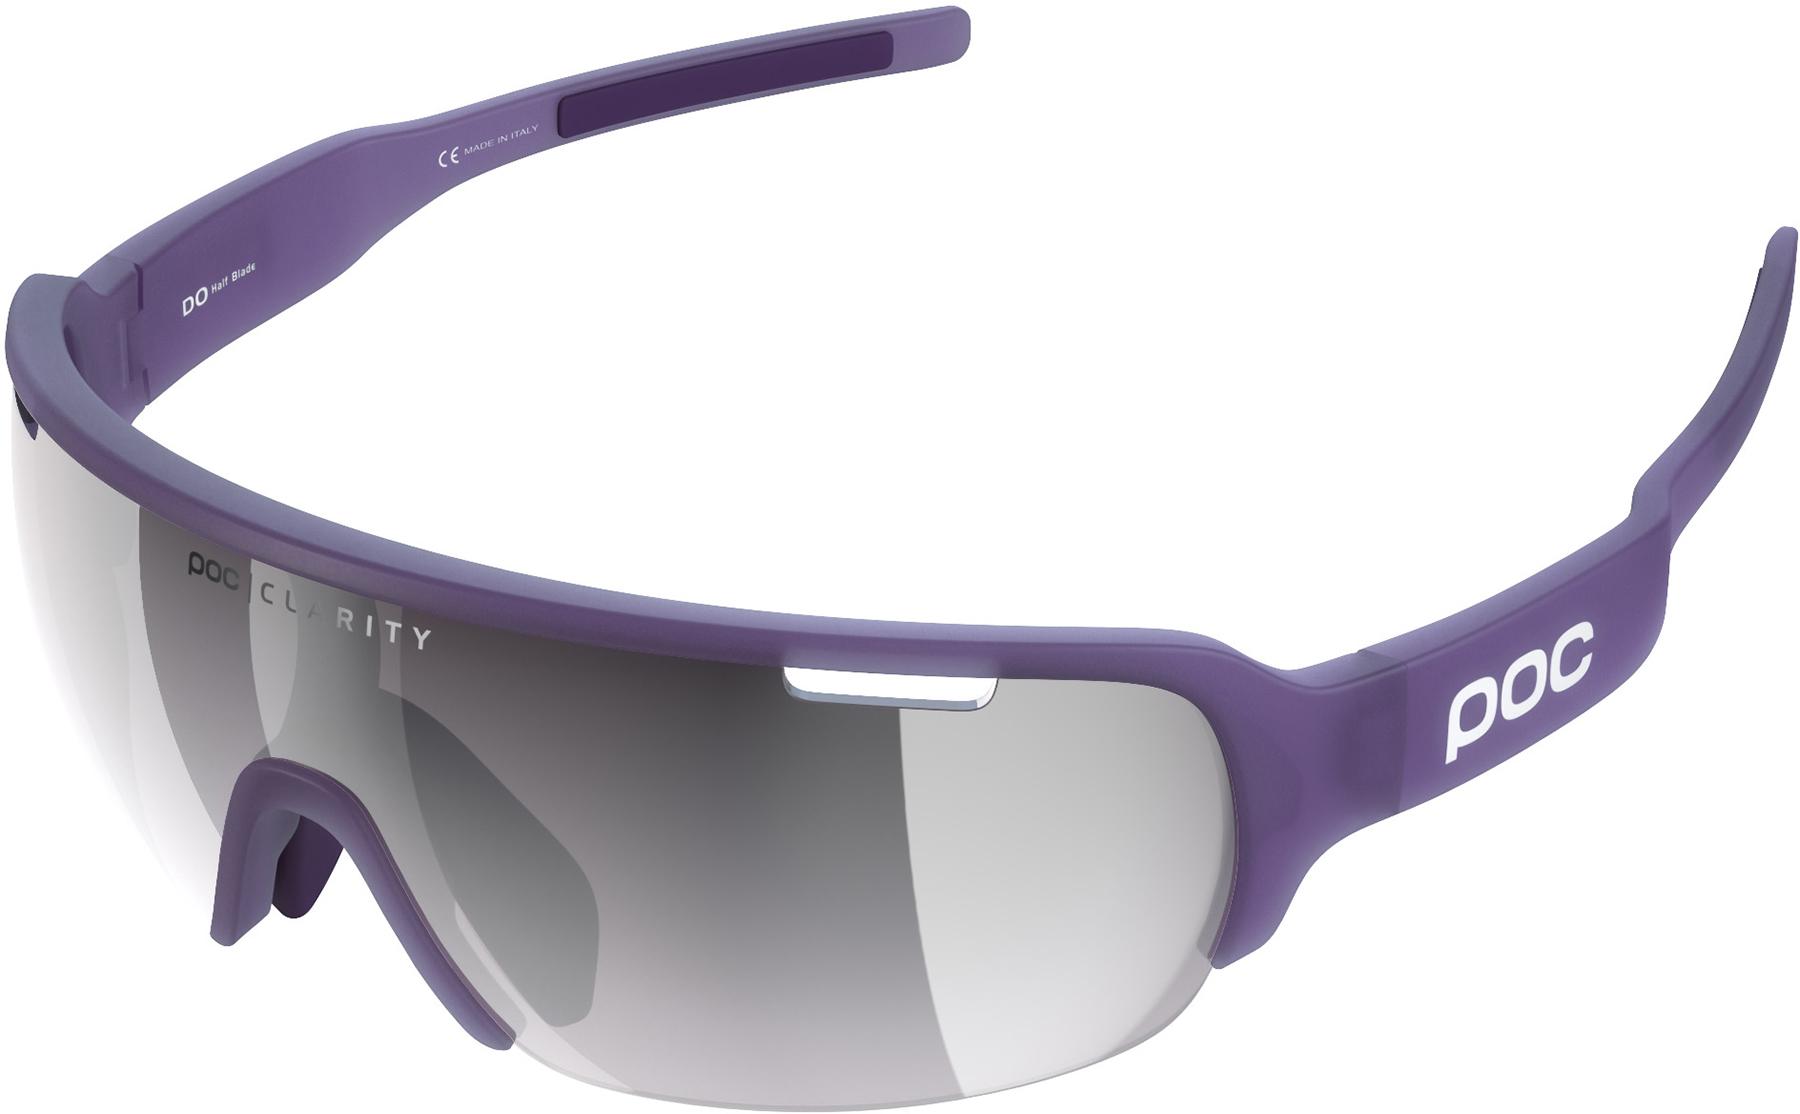 Poc Do Half Blade Clarity Avip Sunglasses - Sapphire Purple Translucent